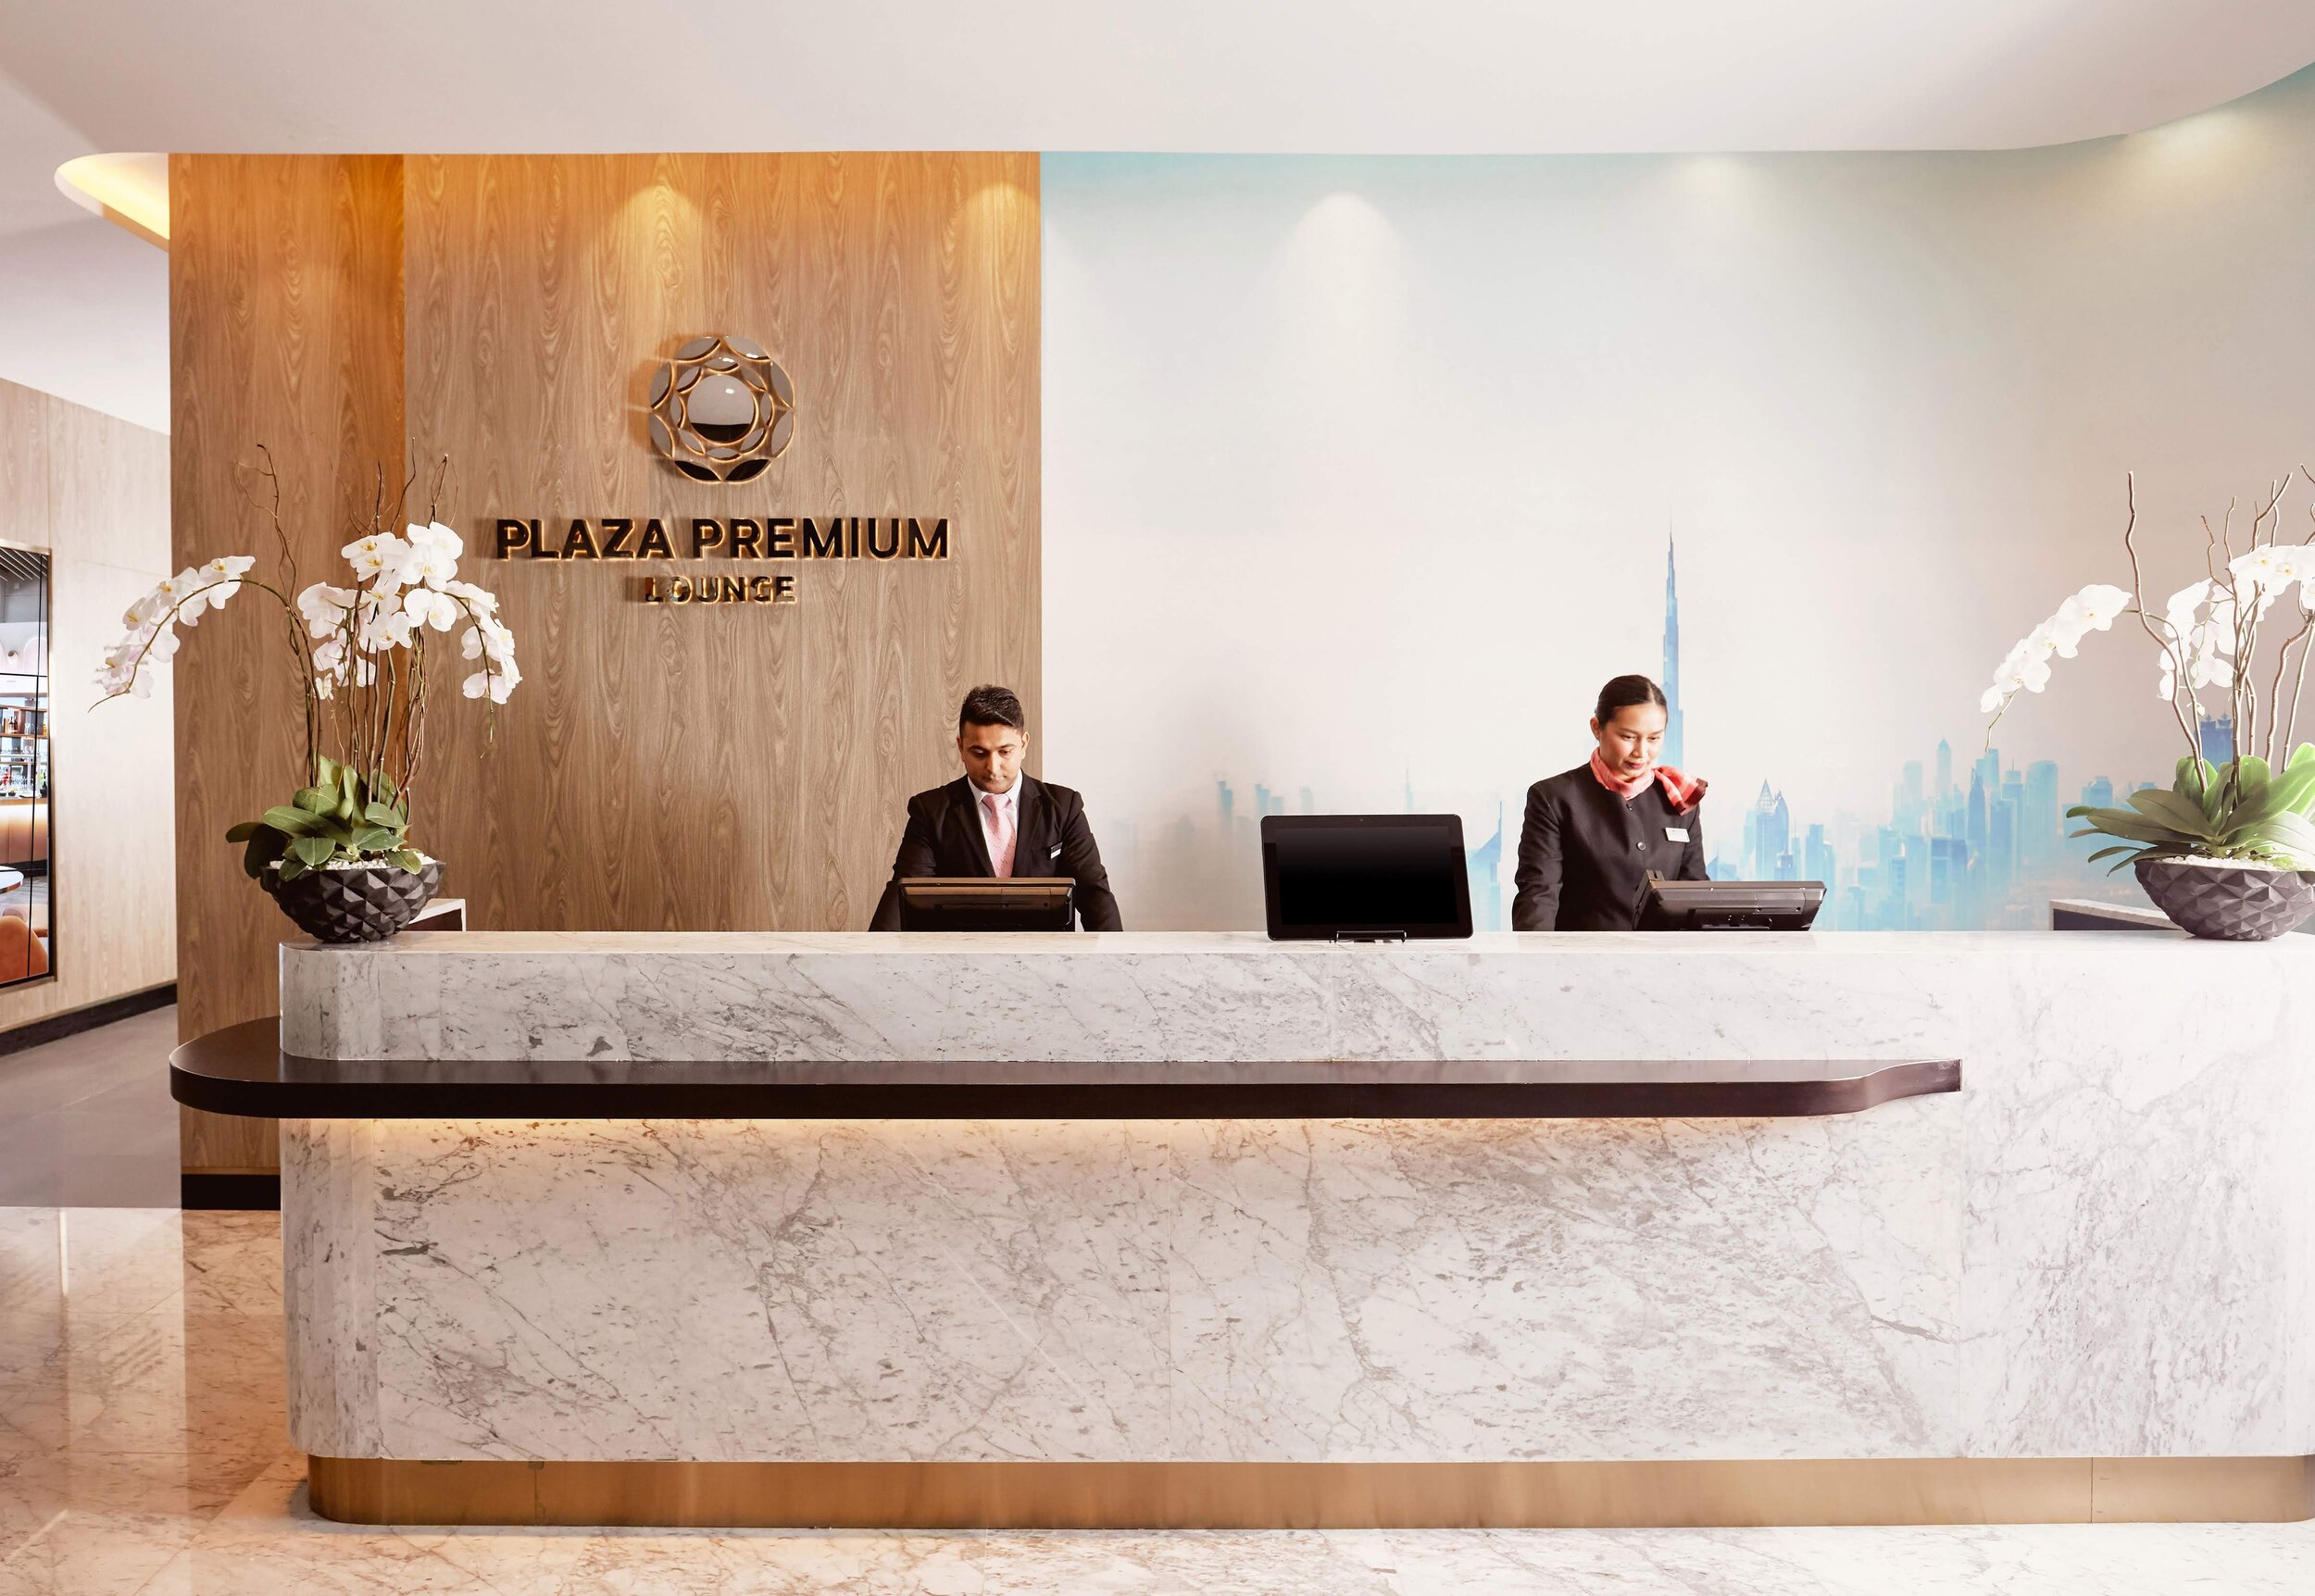 Plaza Premium Lounge Dubai - Reception.jpg